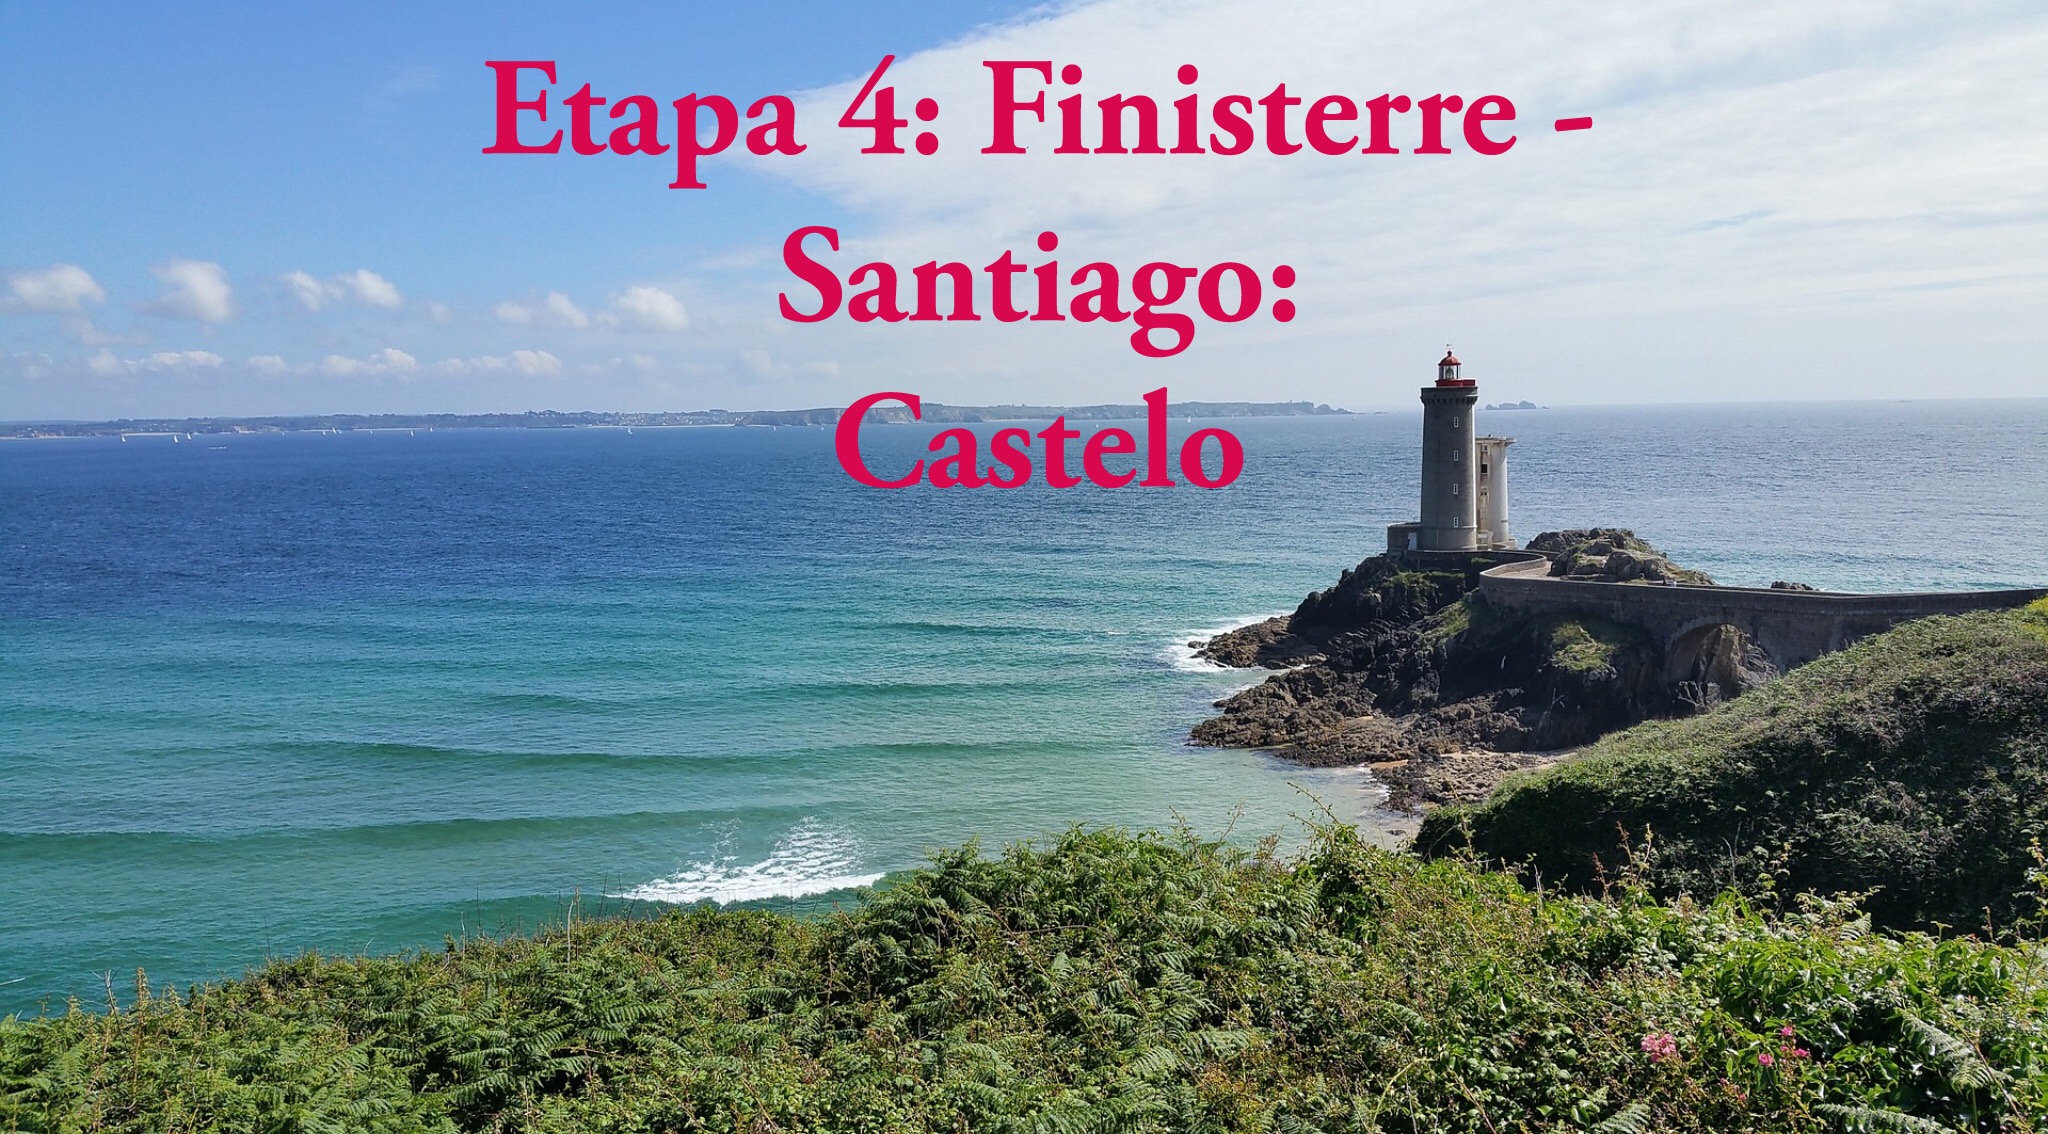 Etapa 4 Finisterre Santiago: Castelo